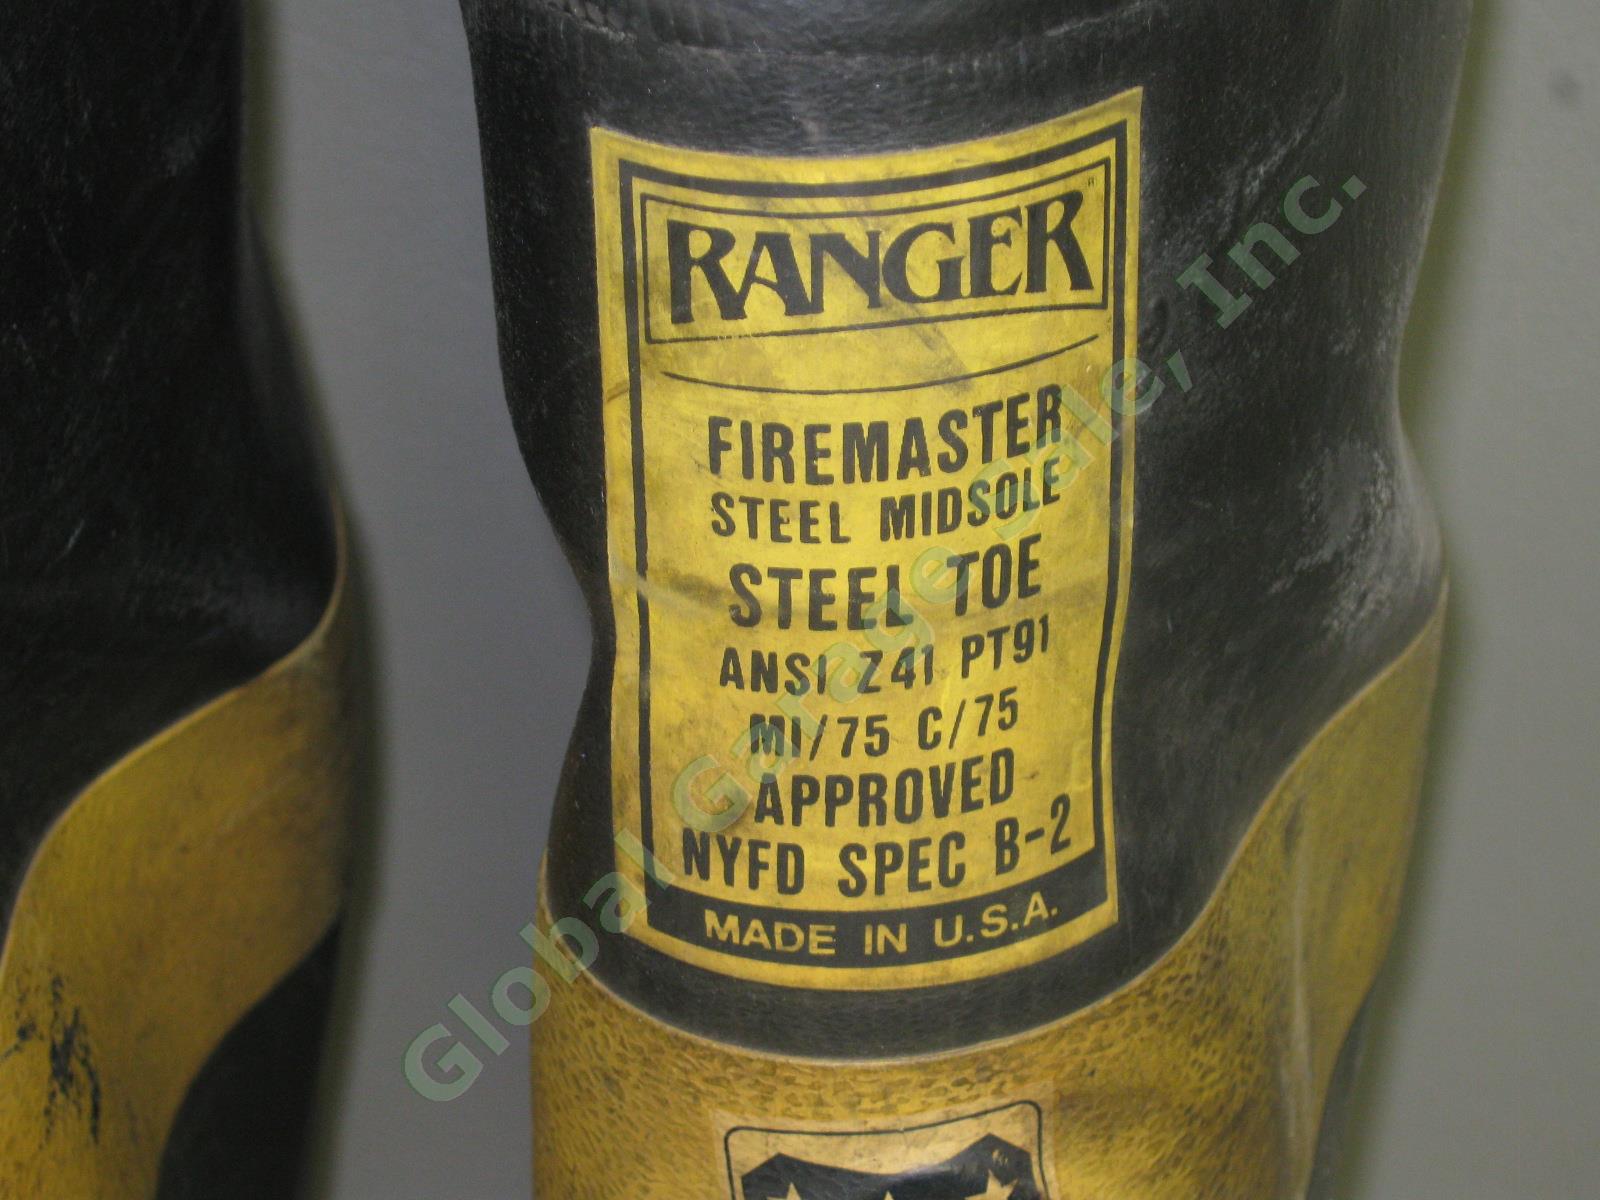 NYFD Ranger Firemaster 34" Firefighter Hip Boots Size 8 Waders Steel Toe Midsole 3